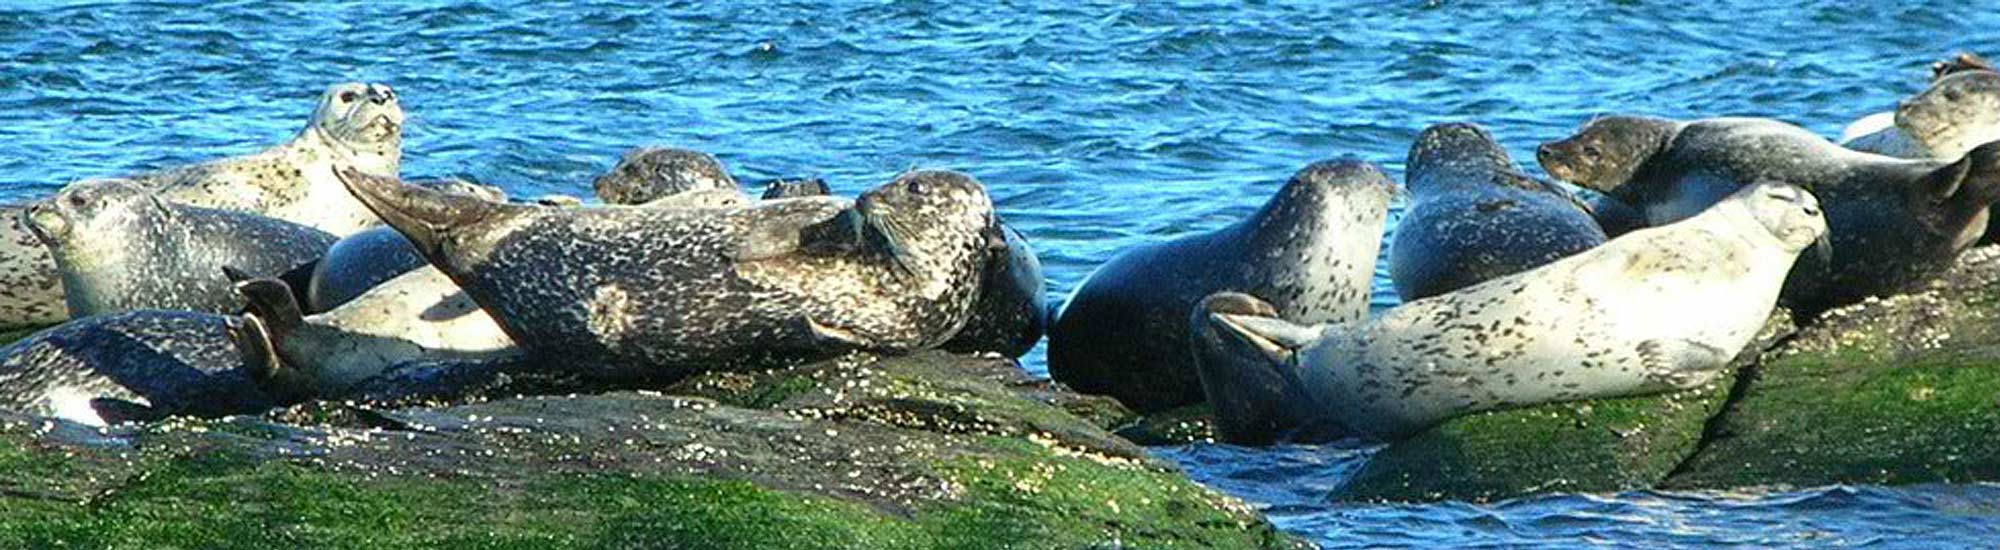 harbor seals enjoying the winter